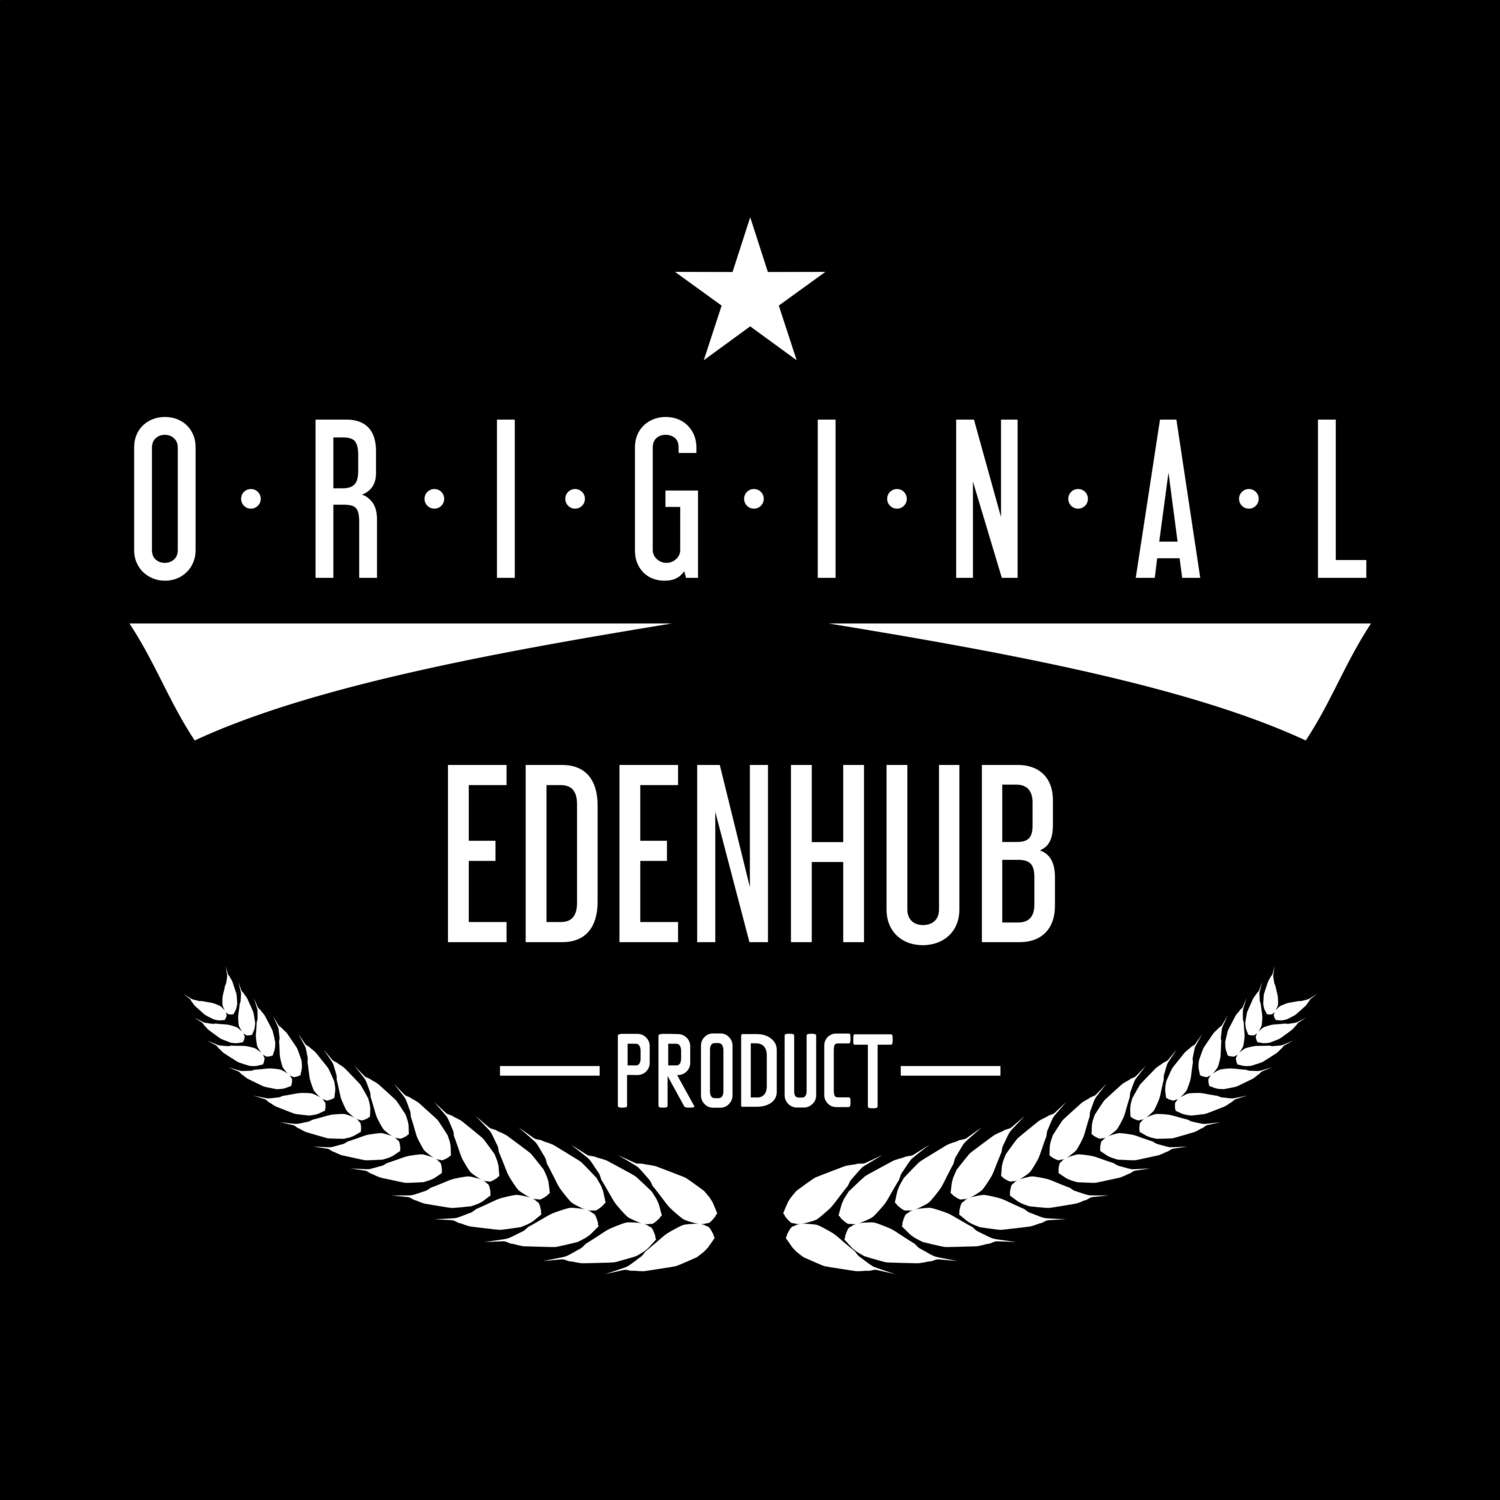 Edenhub T-Shirt »Original Product«